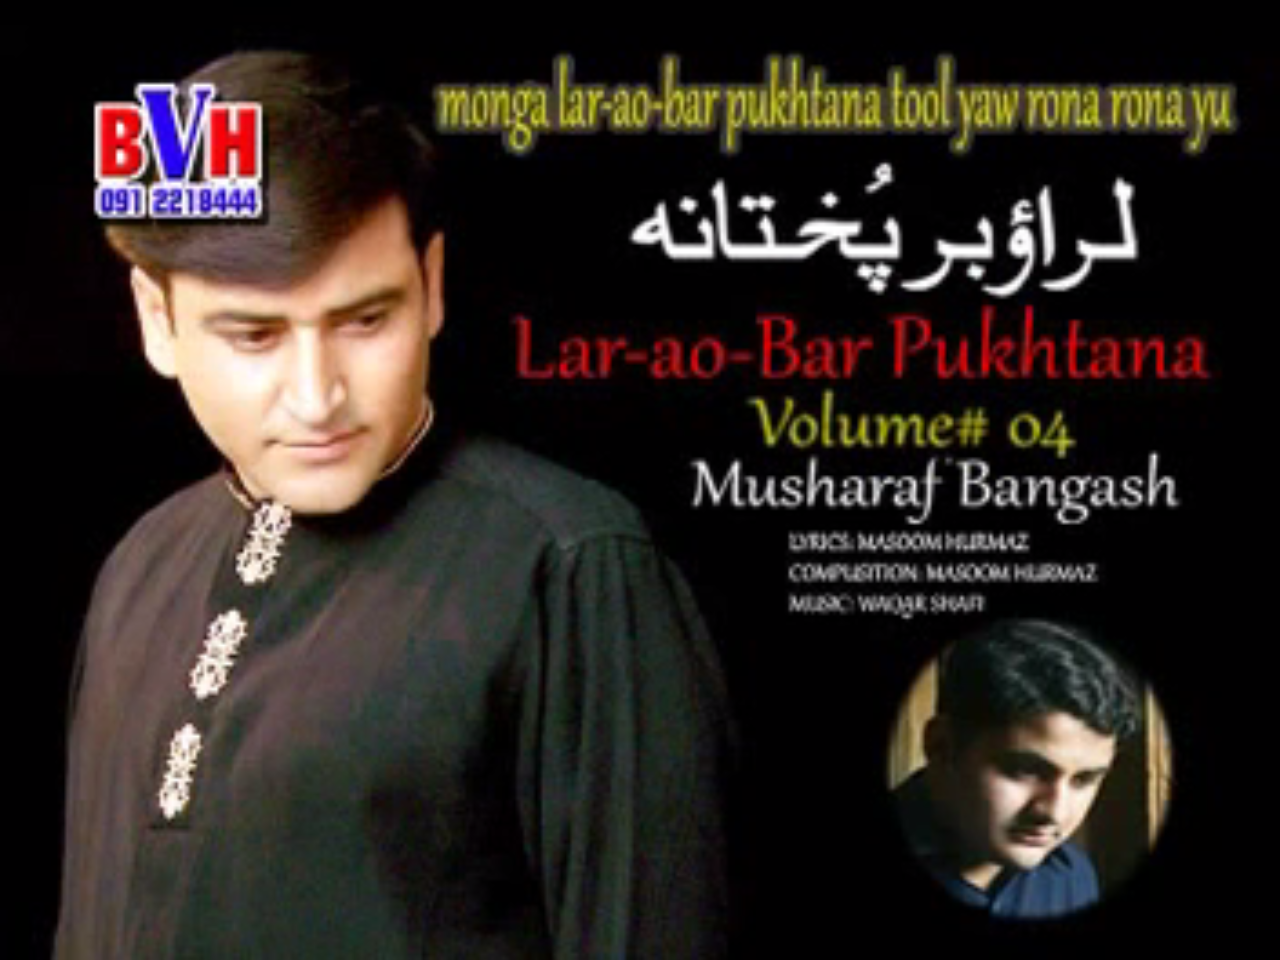 http://www.pashtotorrents.blogspot.com/2014/05/musharaf-bangash-pashto-new-album-lar.html